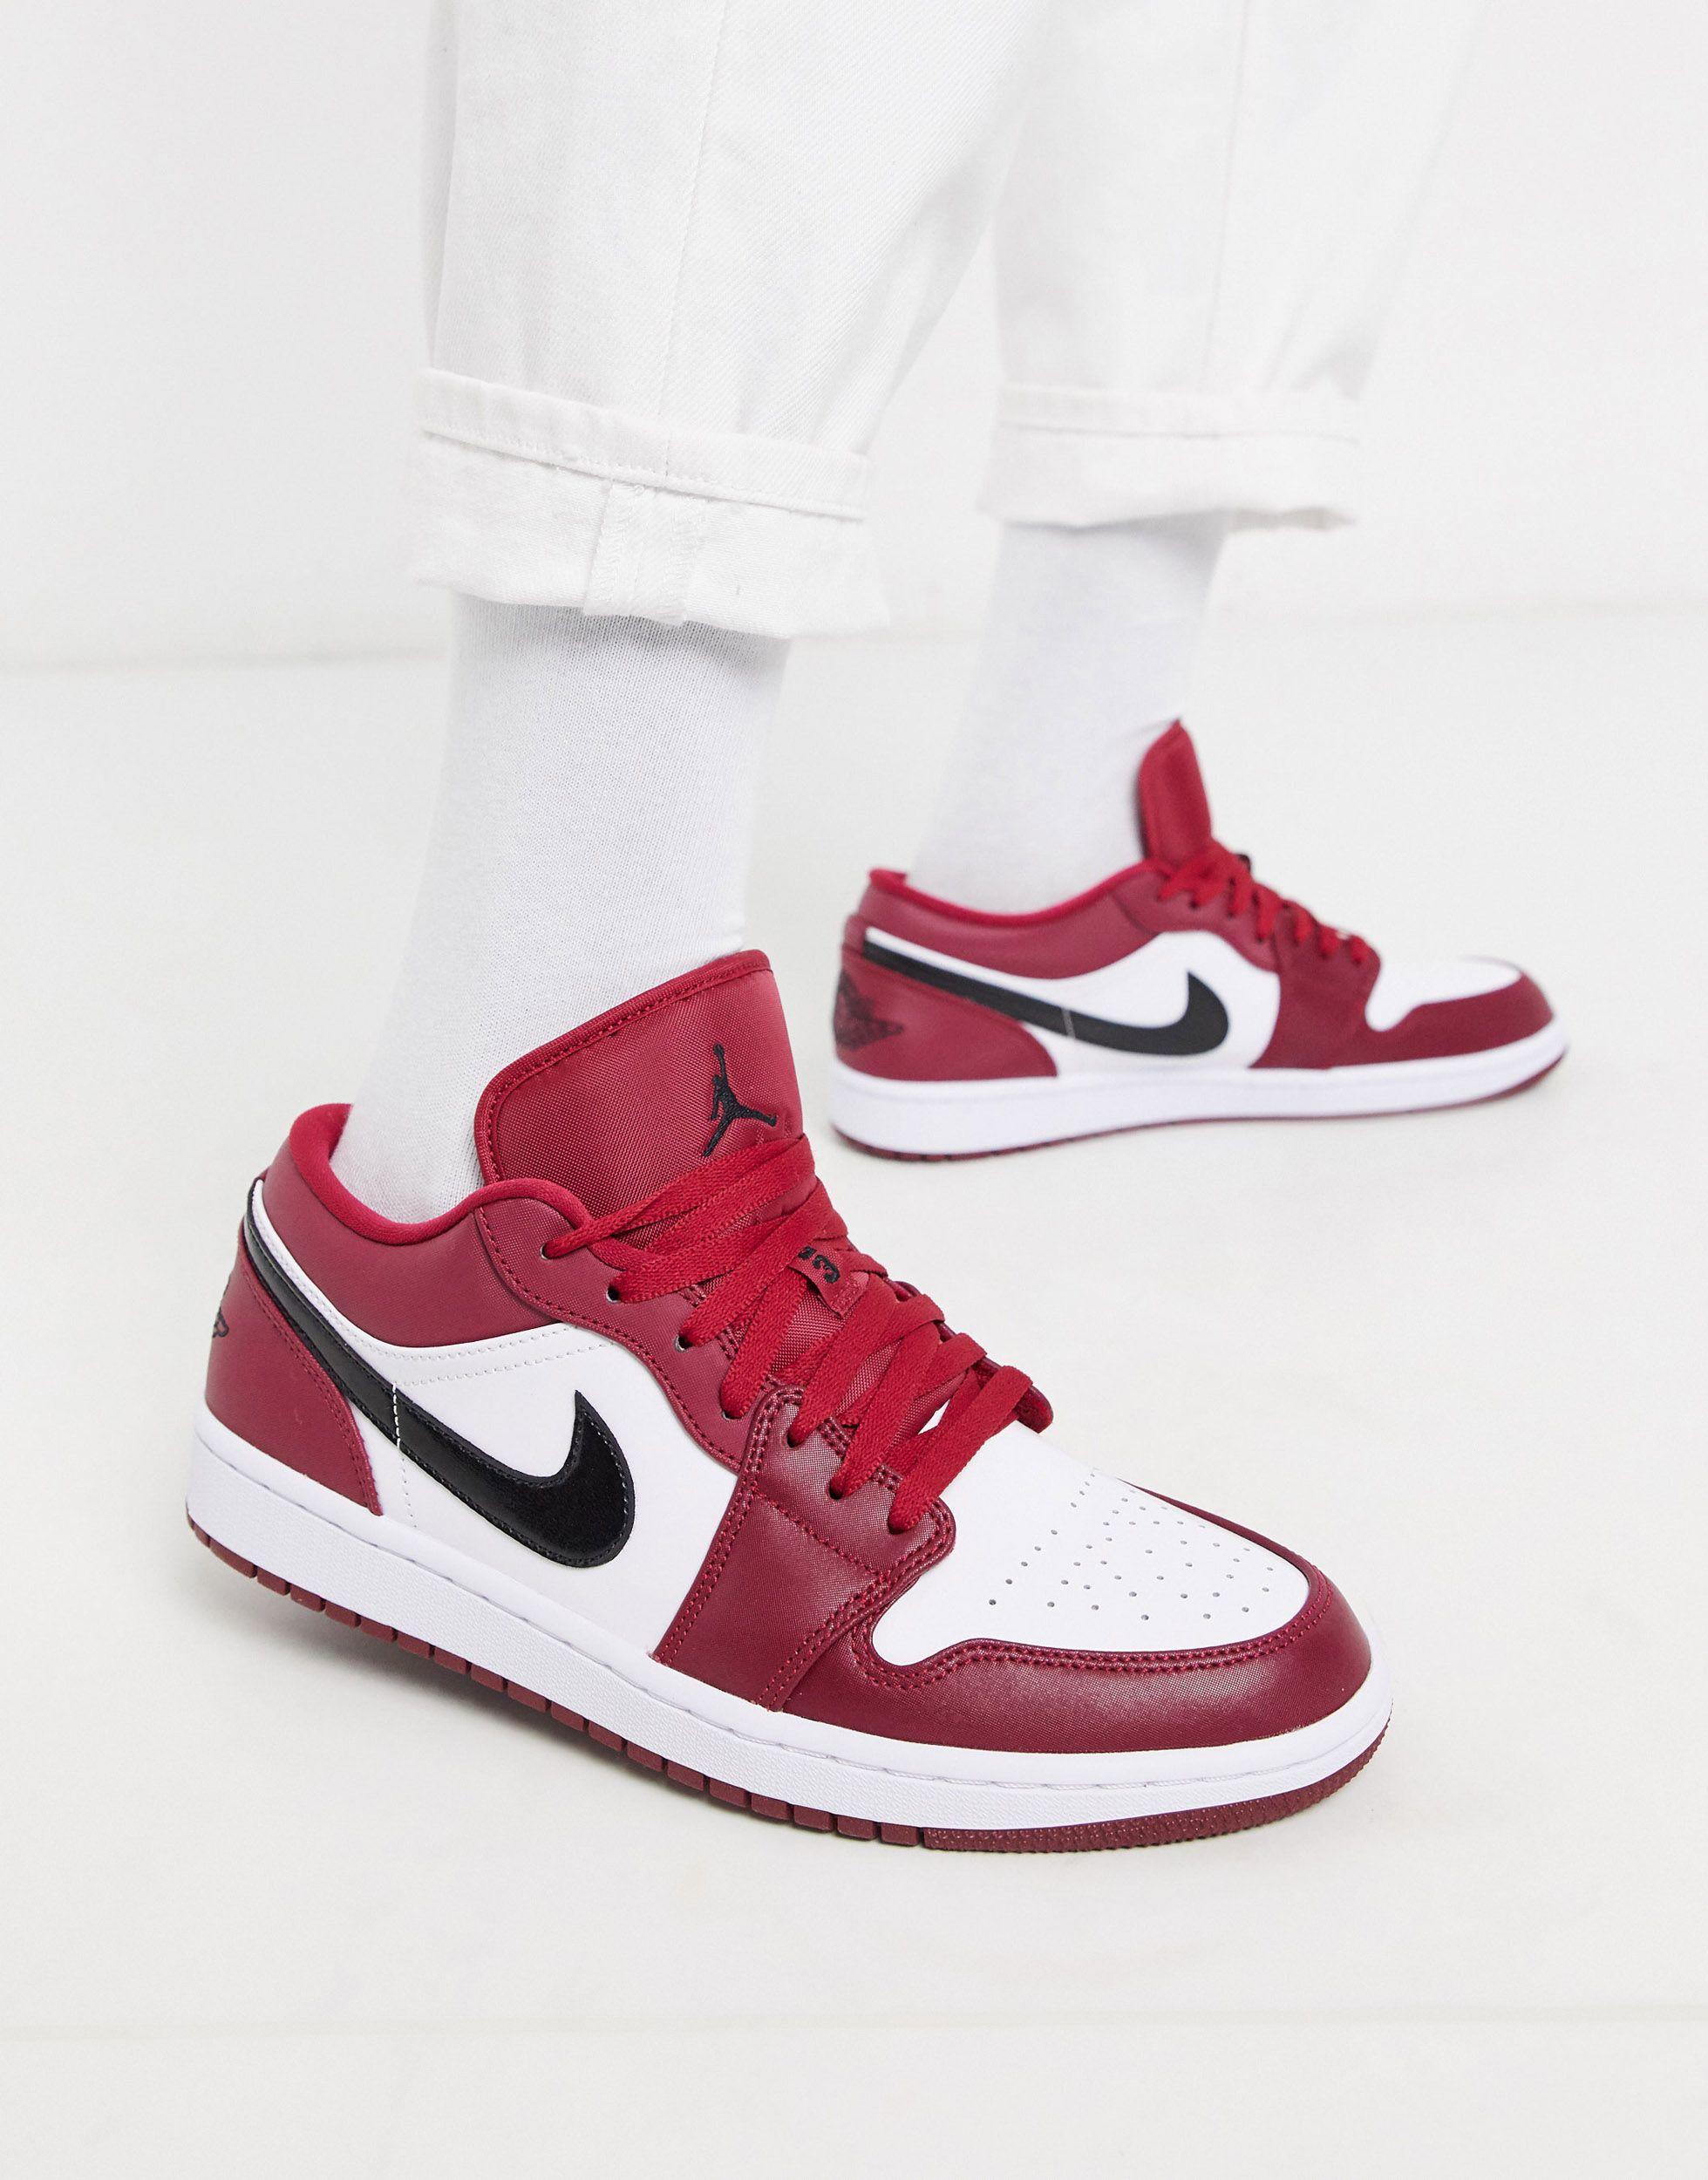 Низкие кроссовки найк. Nike Air Jordan 1 Low. Nike Jordan 1 Low Red.